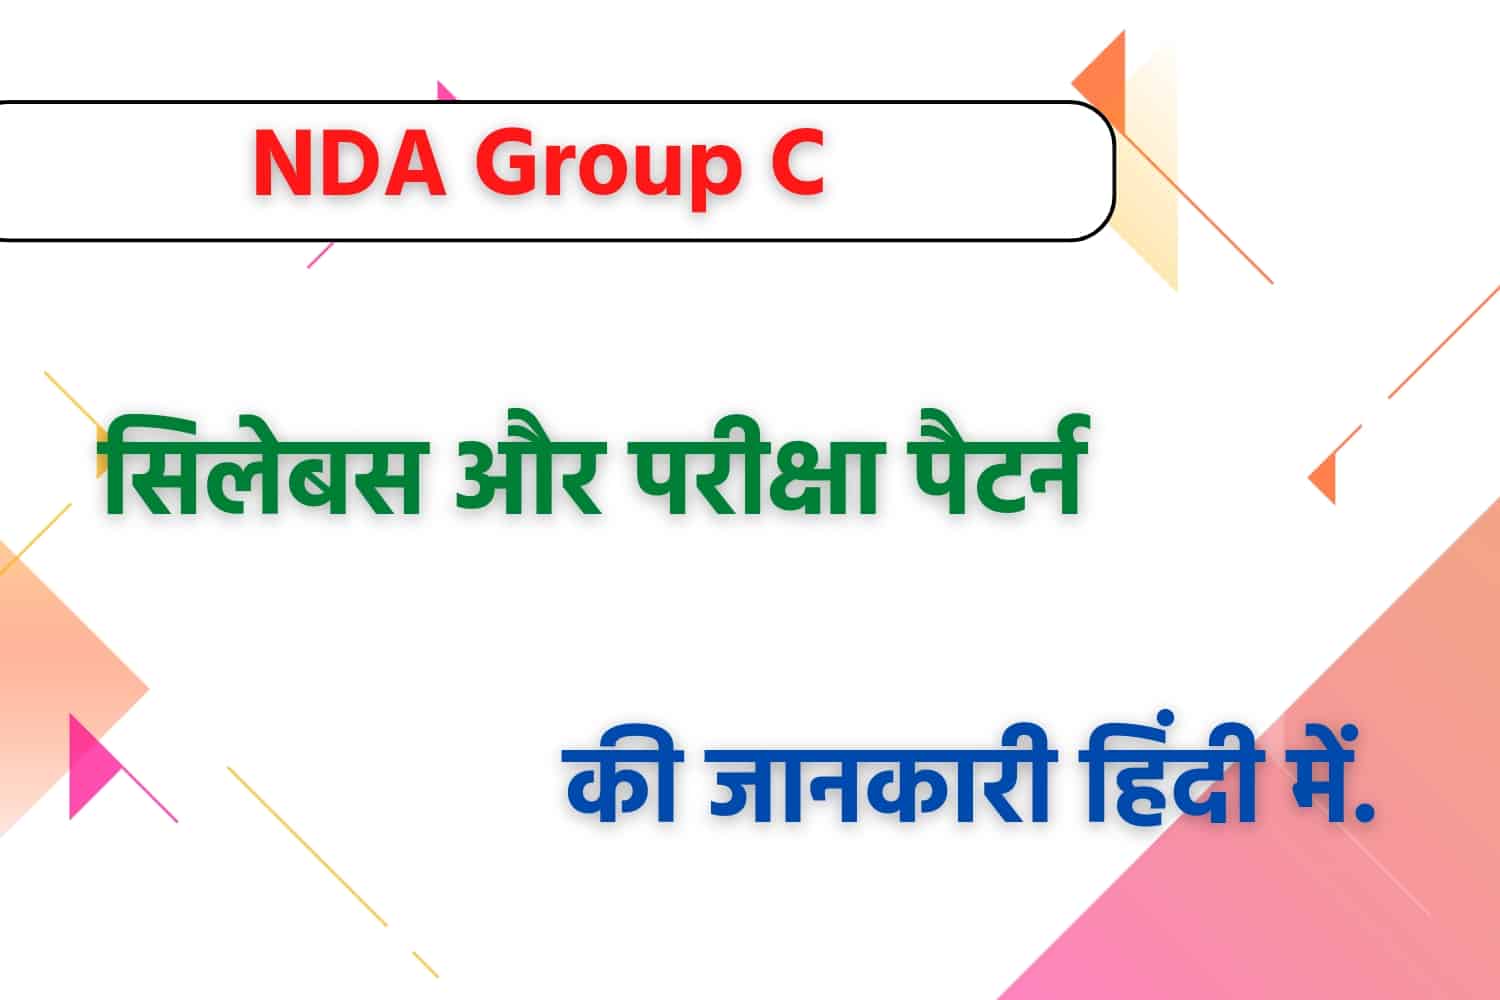 Nda Pune Group C Syllabus In Hindi | एनडीए ग्रुप सी सिलेबस हिंदी में